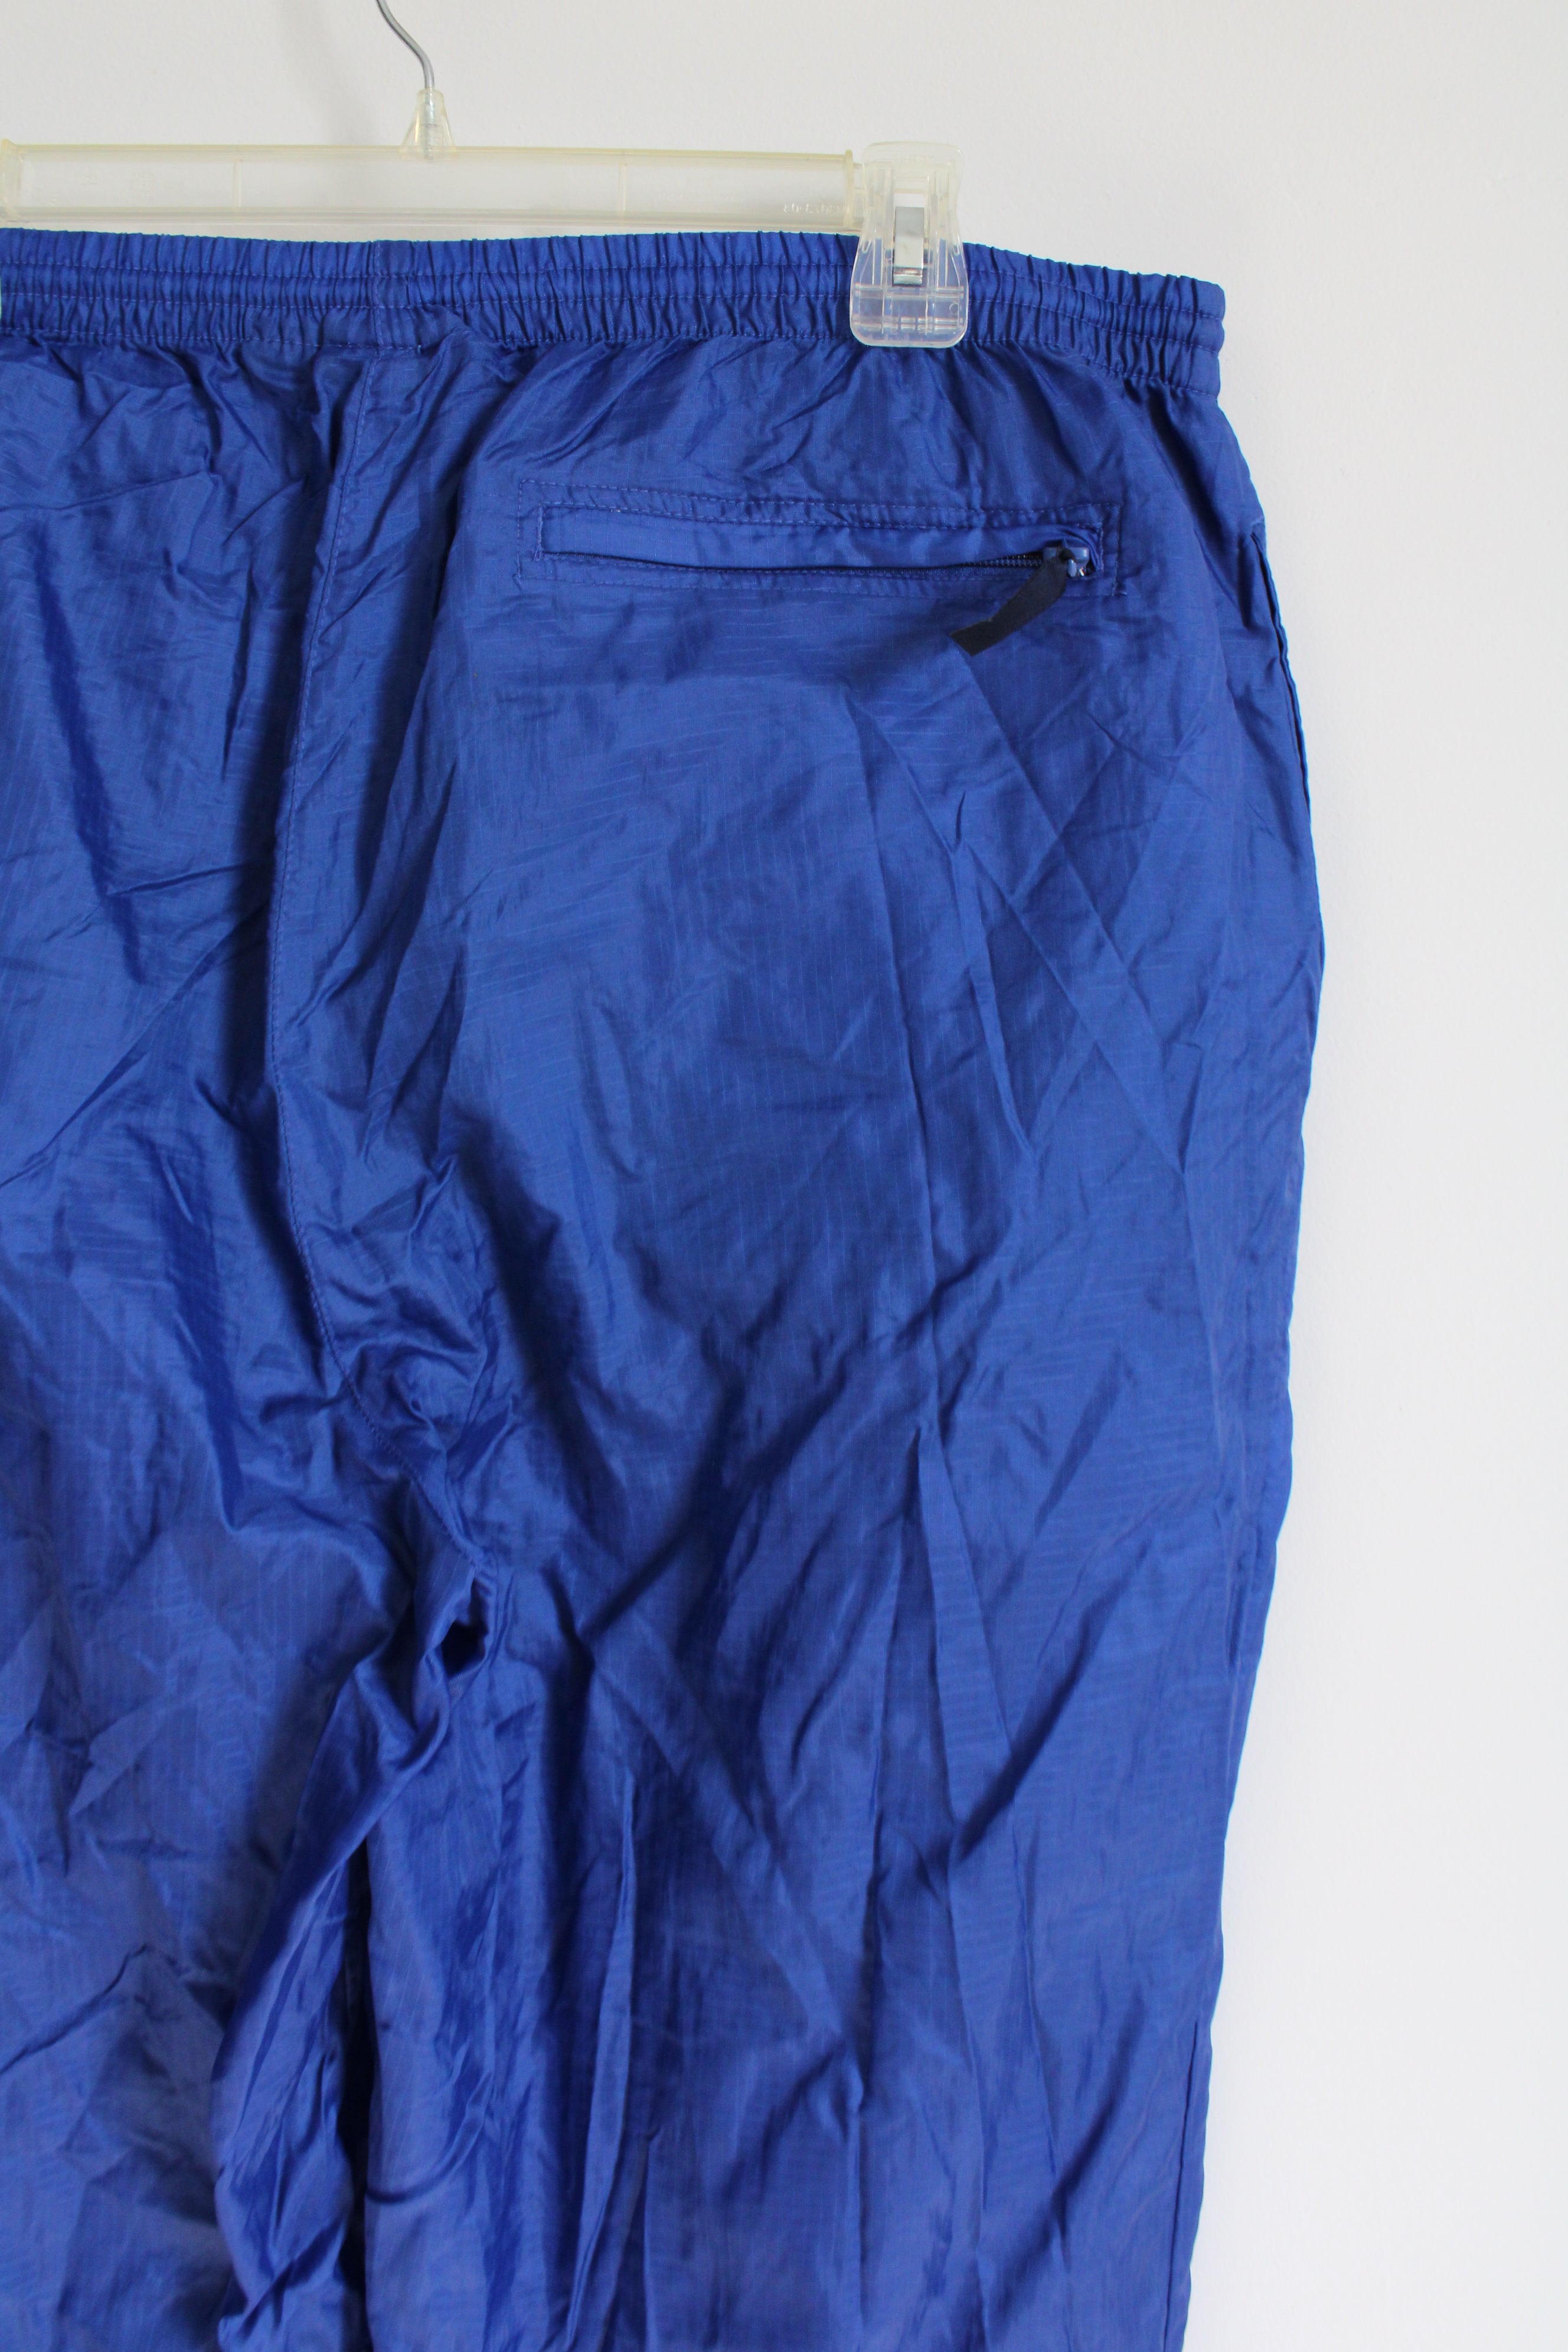 West Marine Nautical Gear Blue Nylon Pants | XL